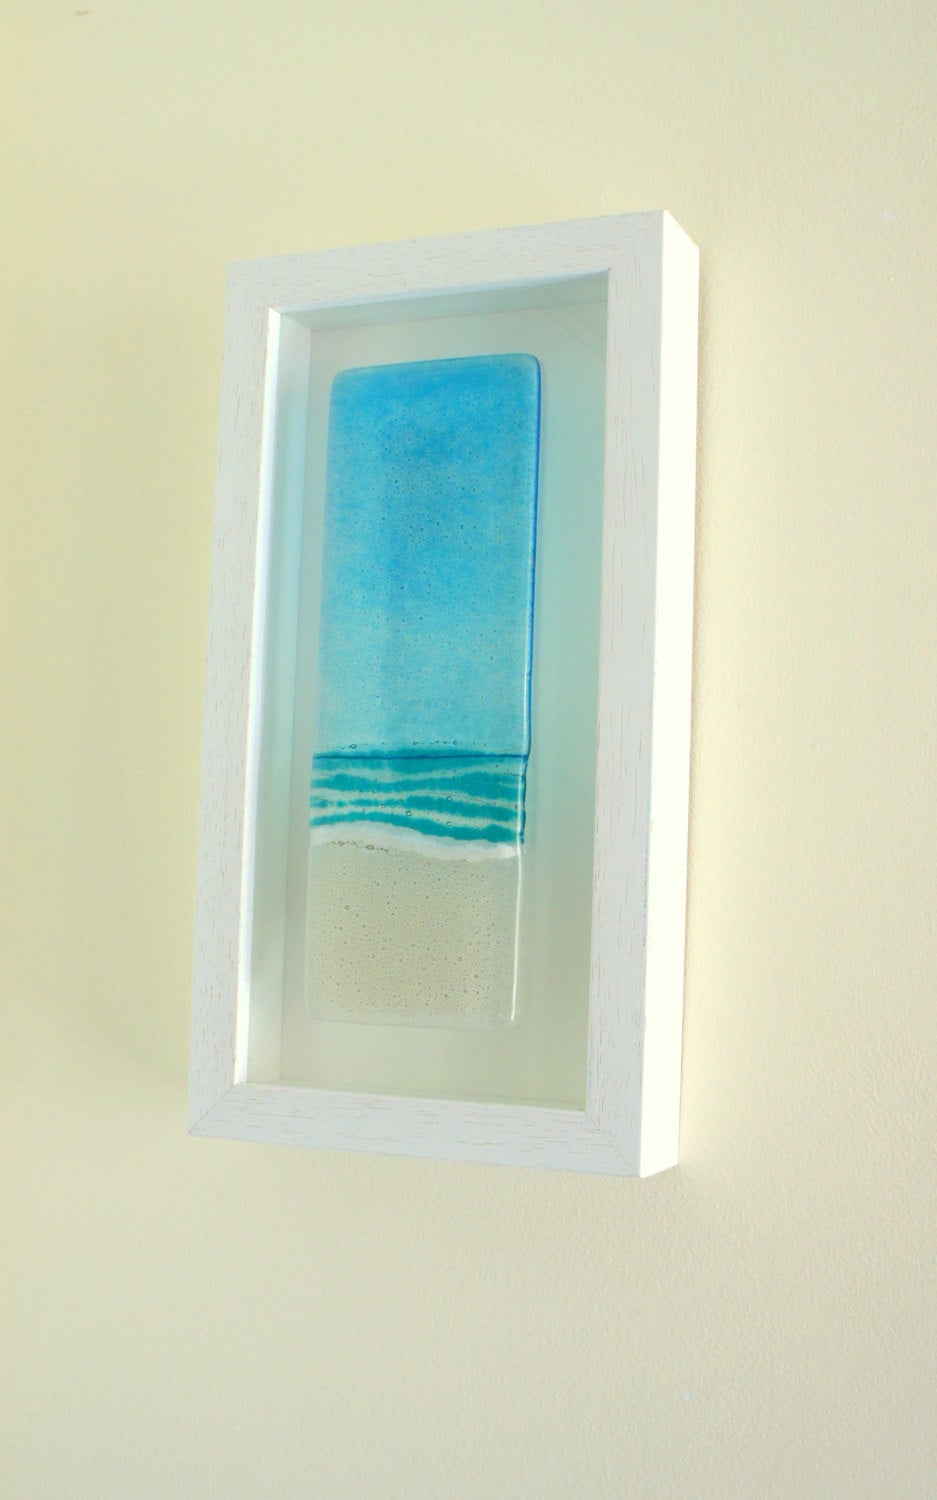 Beach Frame - Turquoise - Portrait - 34x18cm